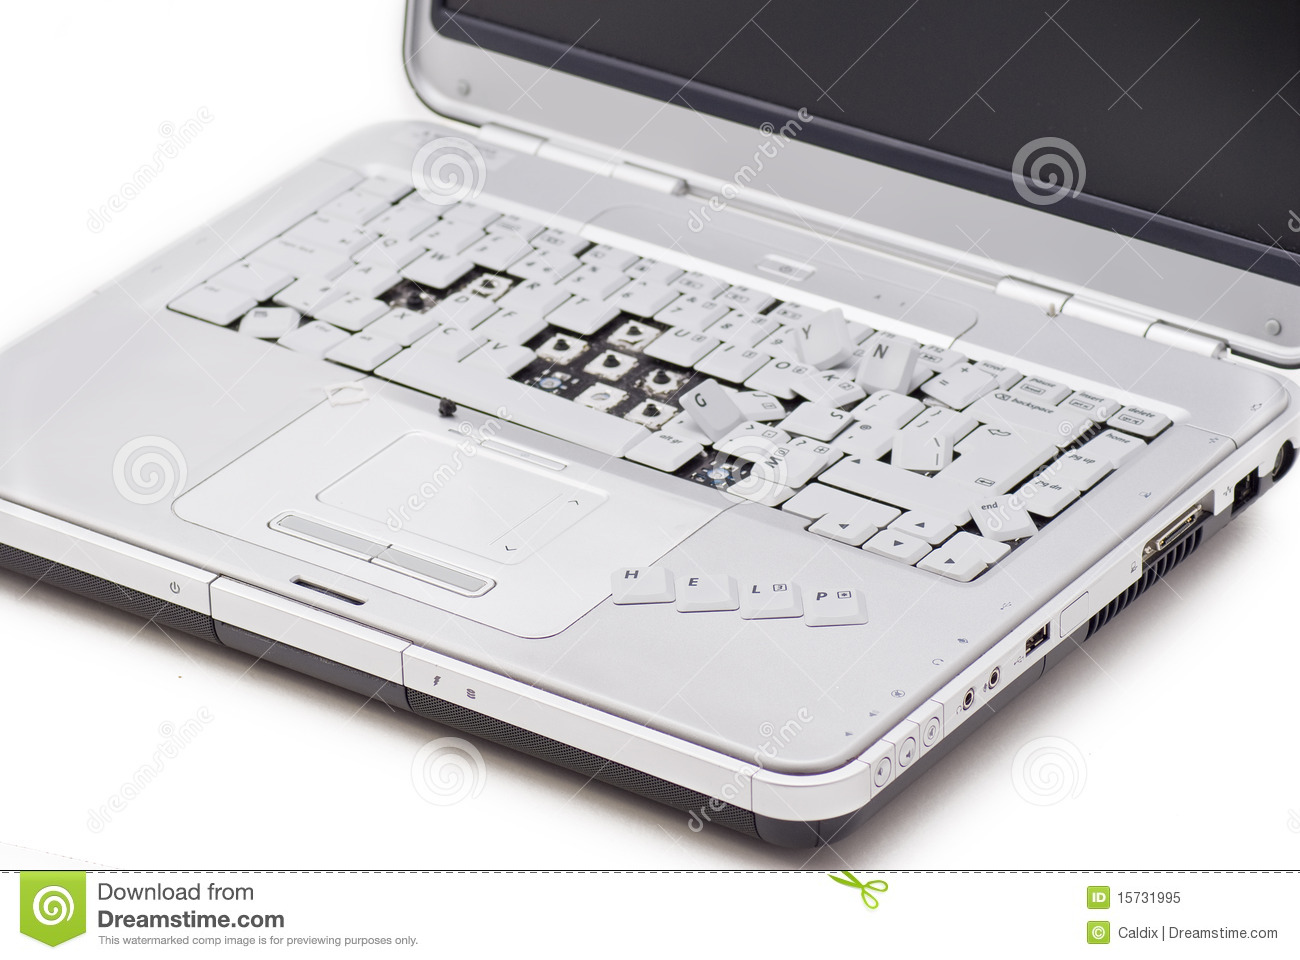 Damaged Laptop With Royalty Free Stock Photo   Image  15731995